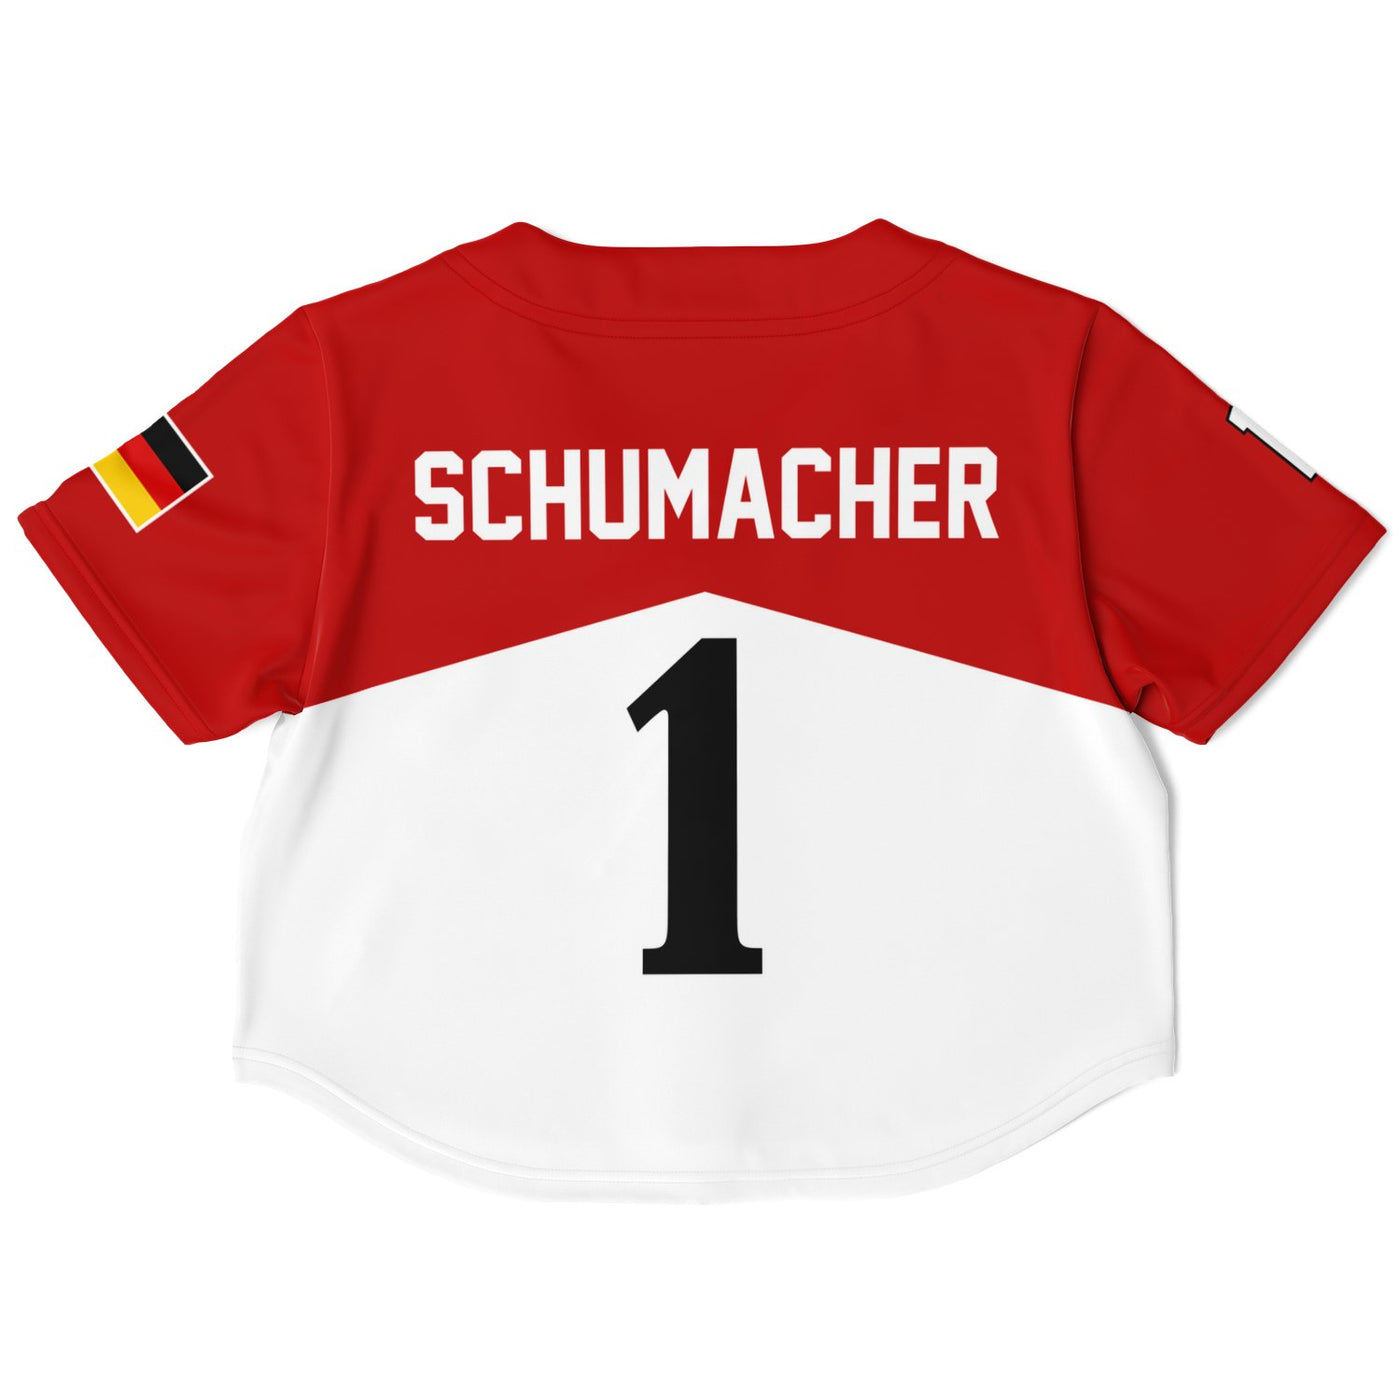 Schumacher - Iconic Livery Crop Top Jersey - Furious Motorsport